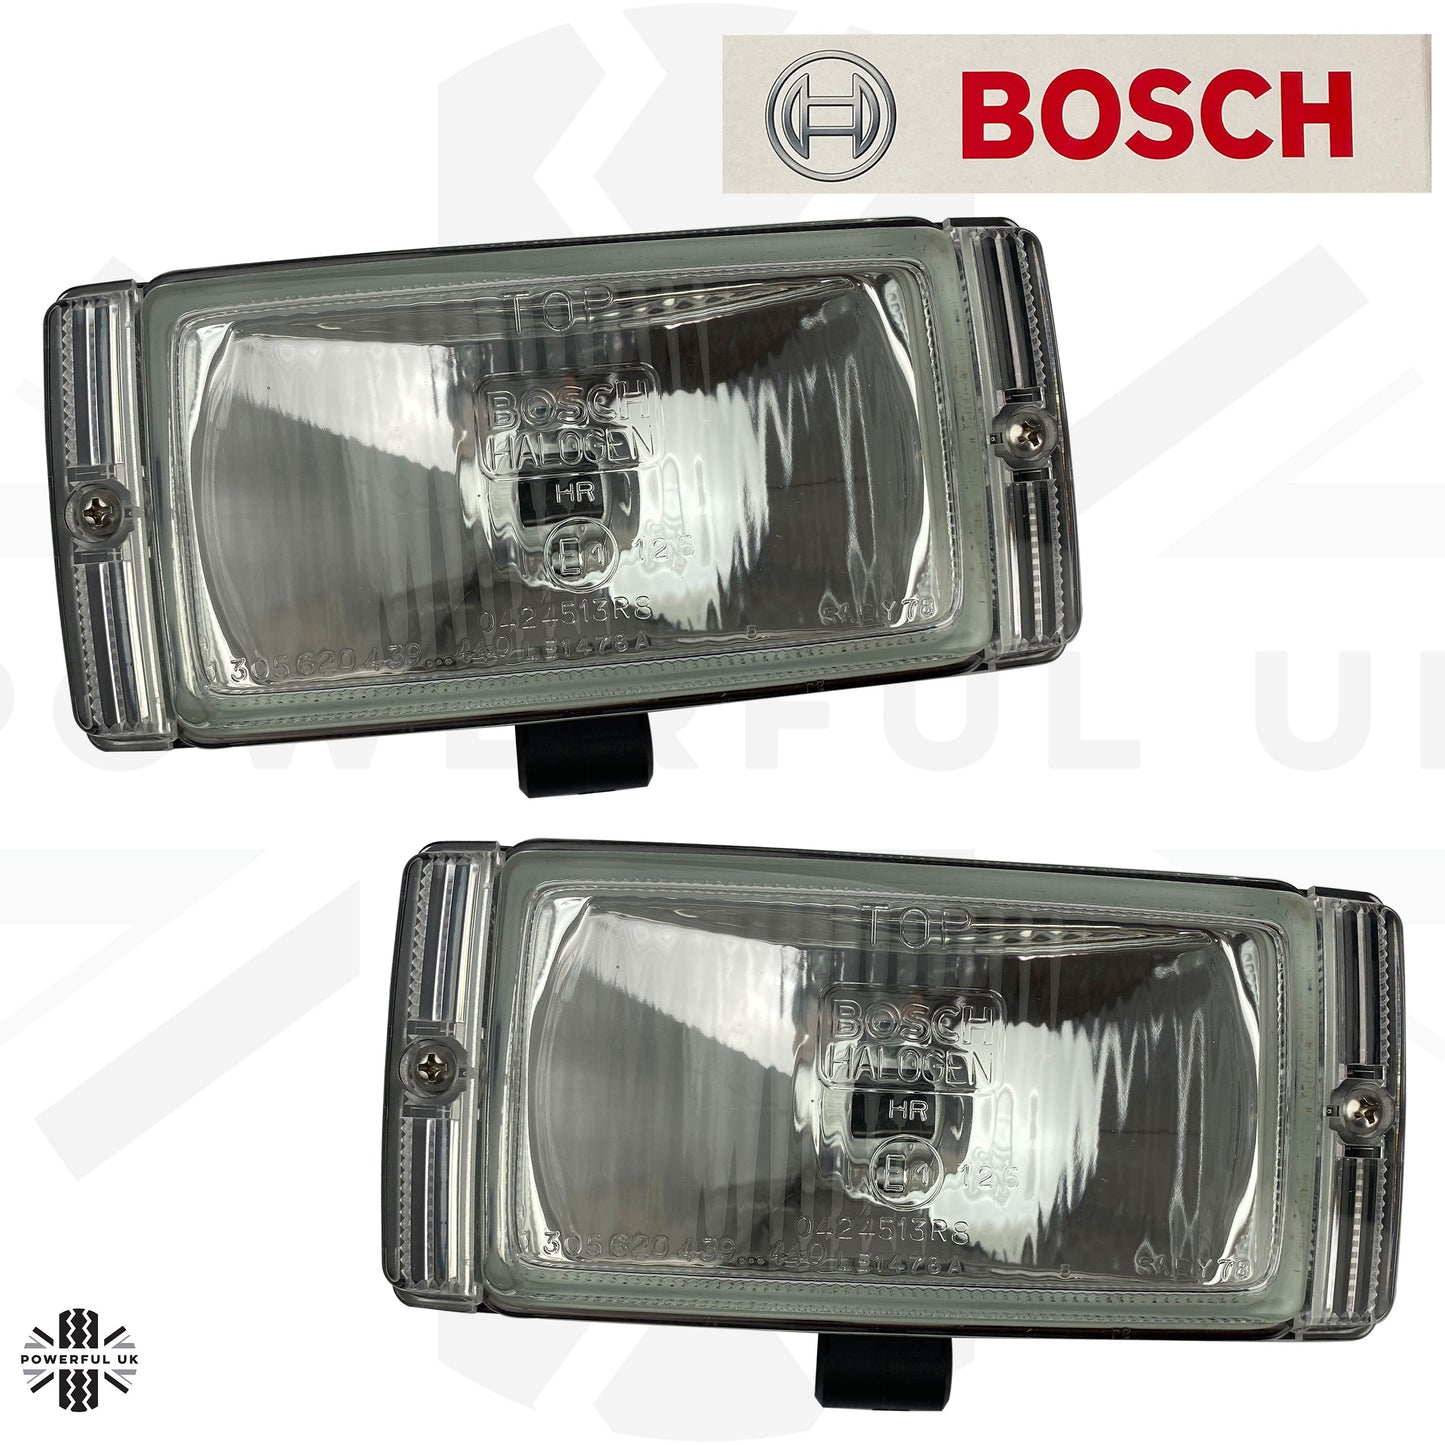 Bosch Driving Light Kit with Osram H3 Bulbs